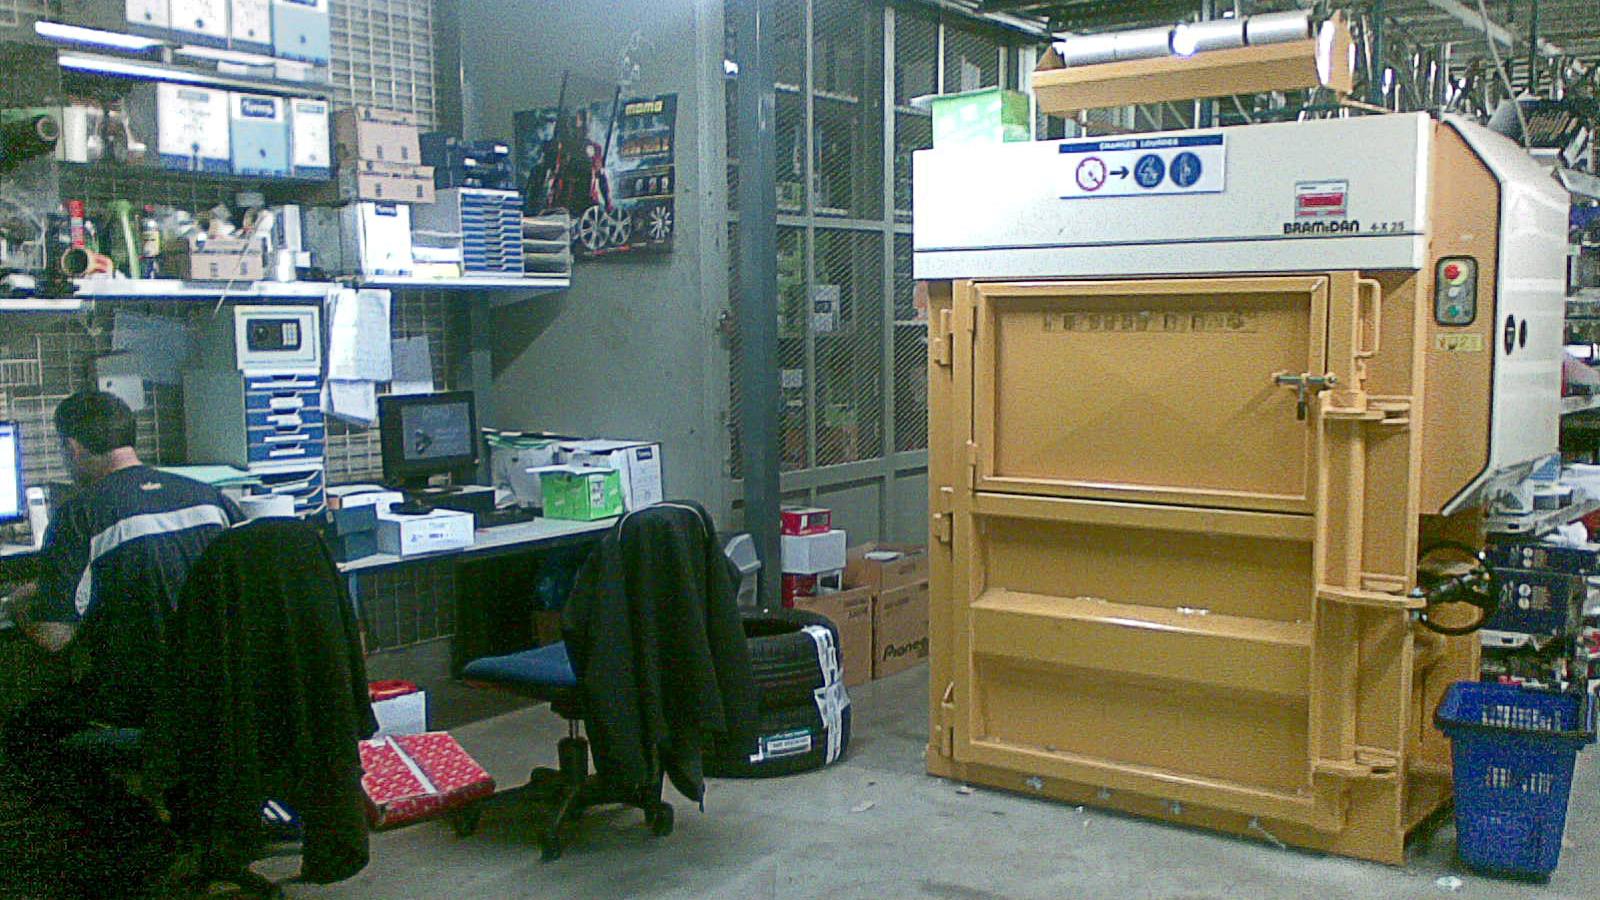 Une presse Bramidan compacte est installée au centre du local Norauto 